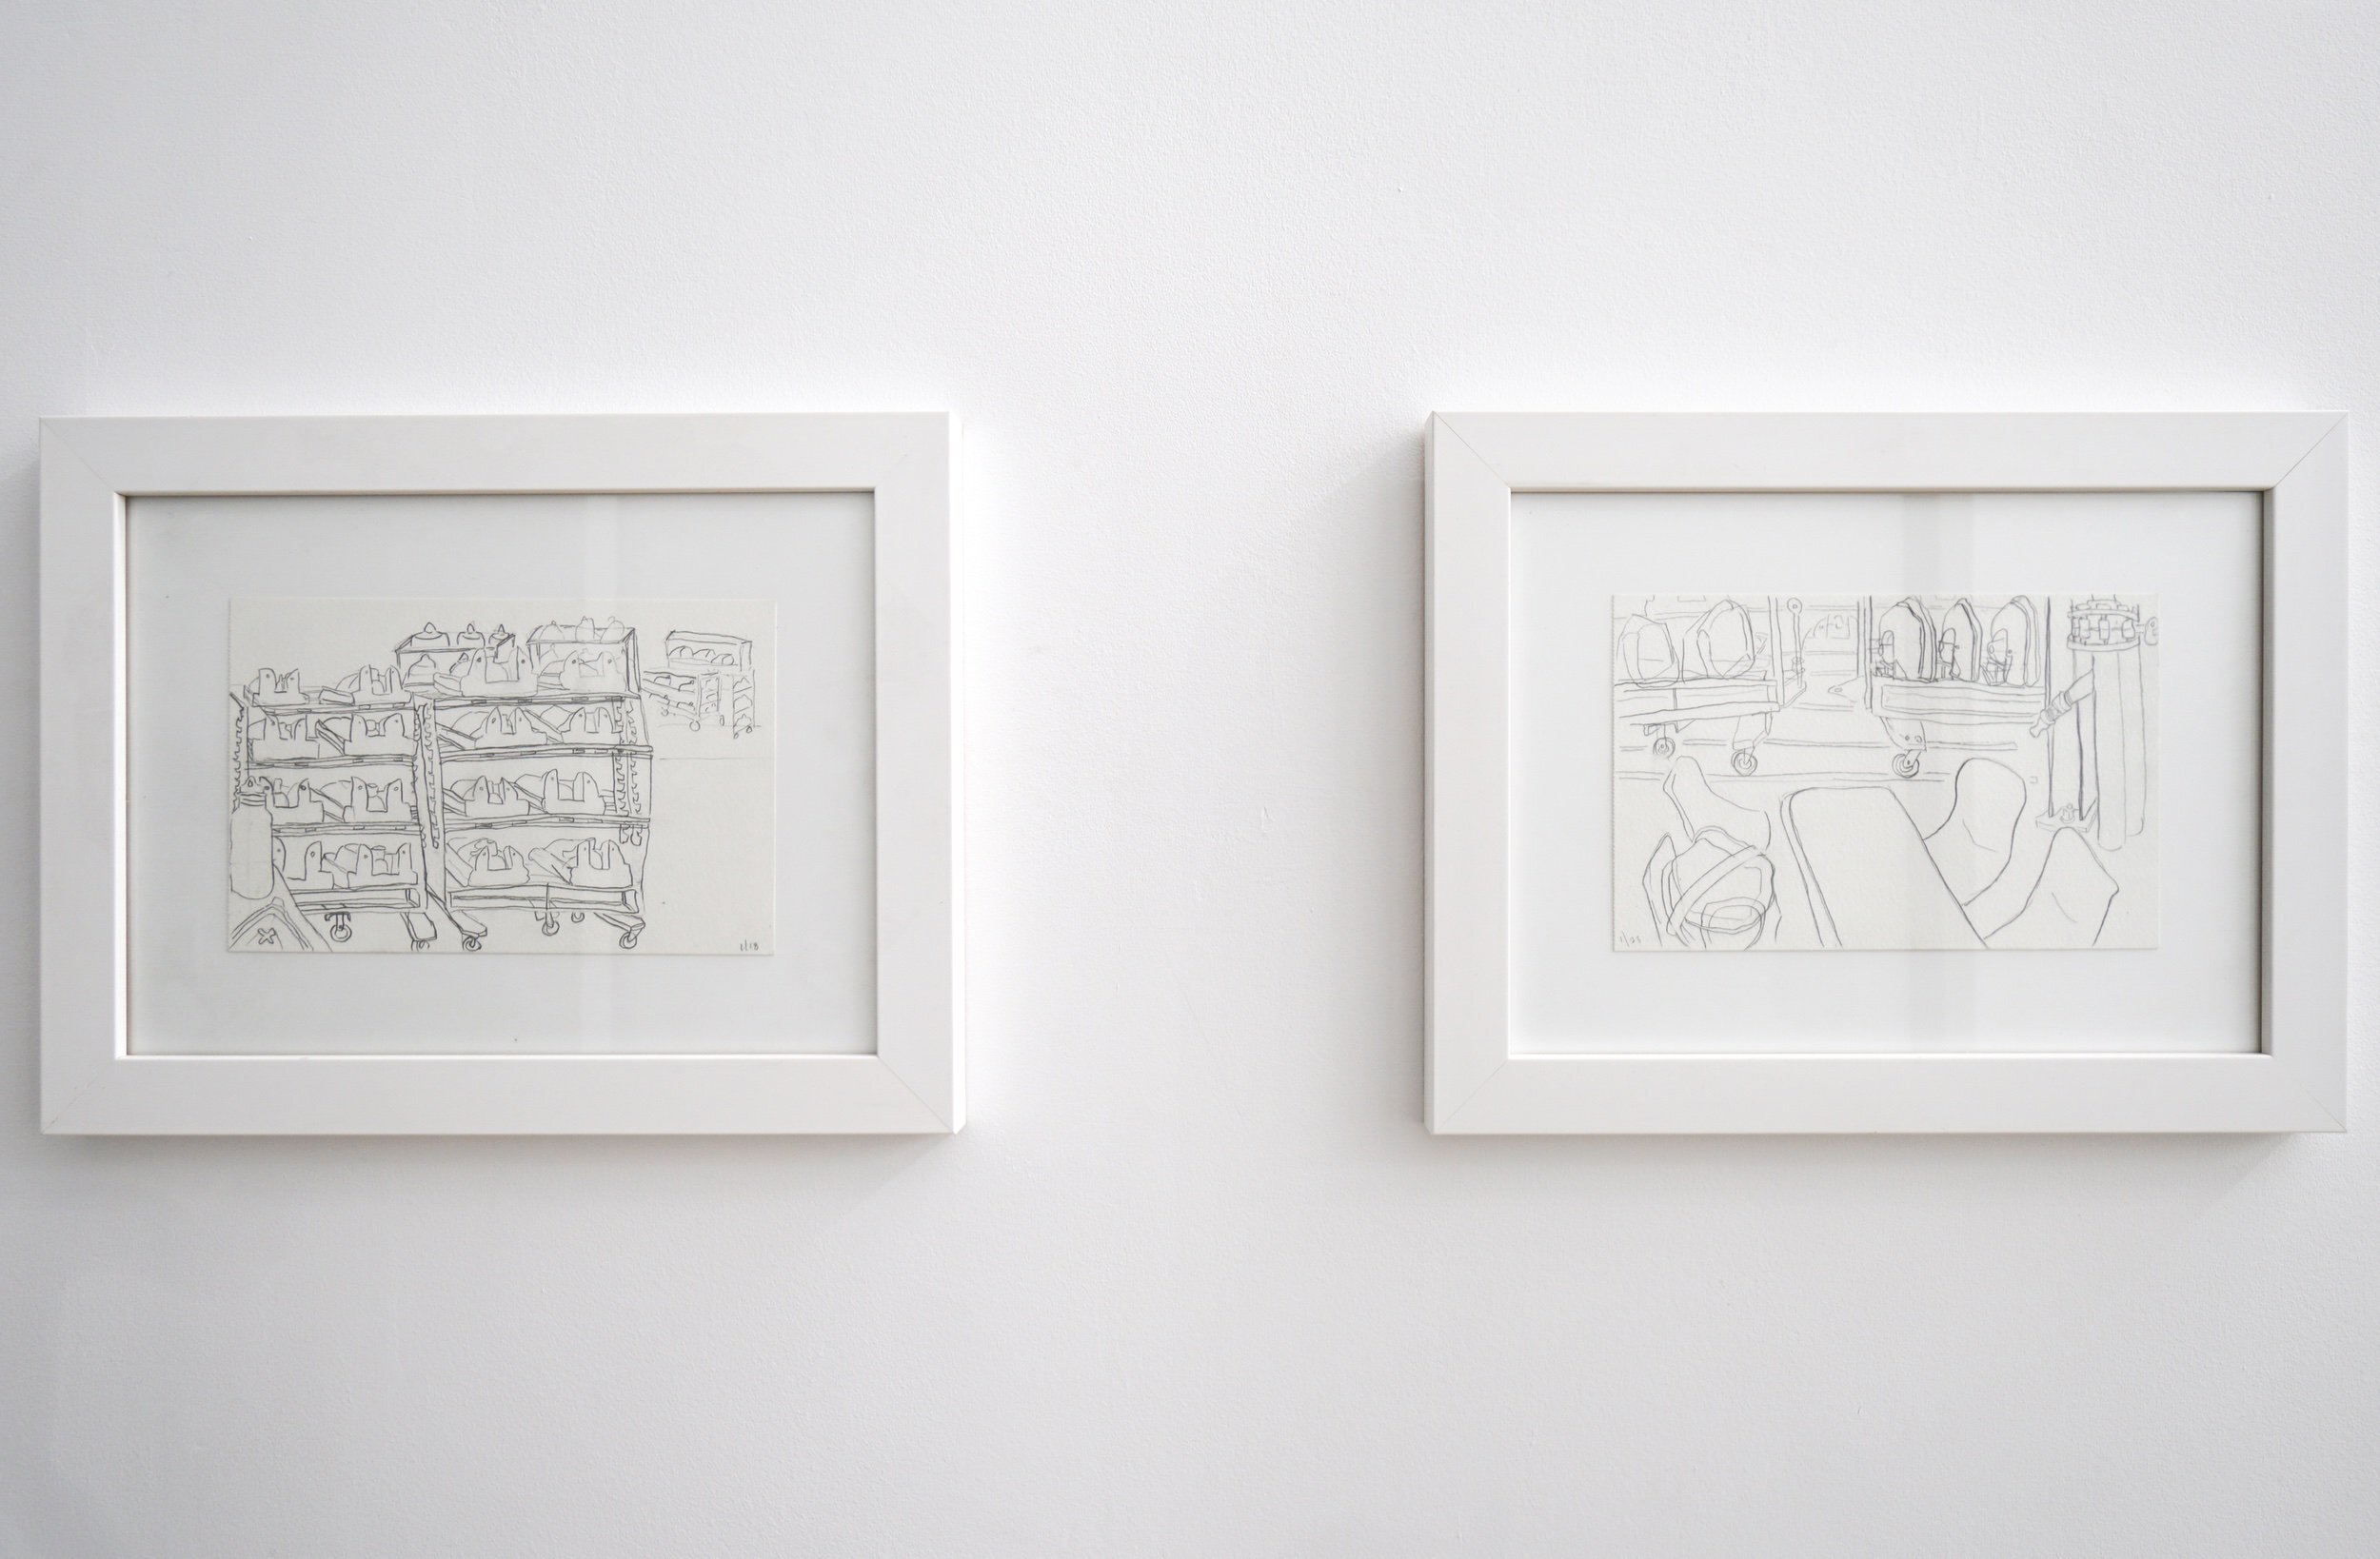  Left:  Nicki Green   Untitled (sinks) , 2019  Pencil on paper  5.5 x 8.5 inches     Right:  Nicki Green   Untitled (lunch) , 2019  Pencil on paper  5.5 x 8.5 inches 